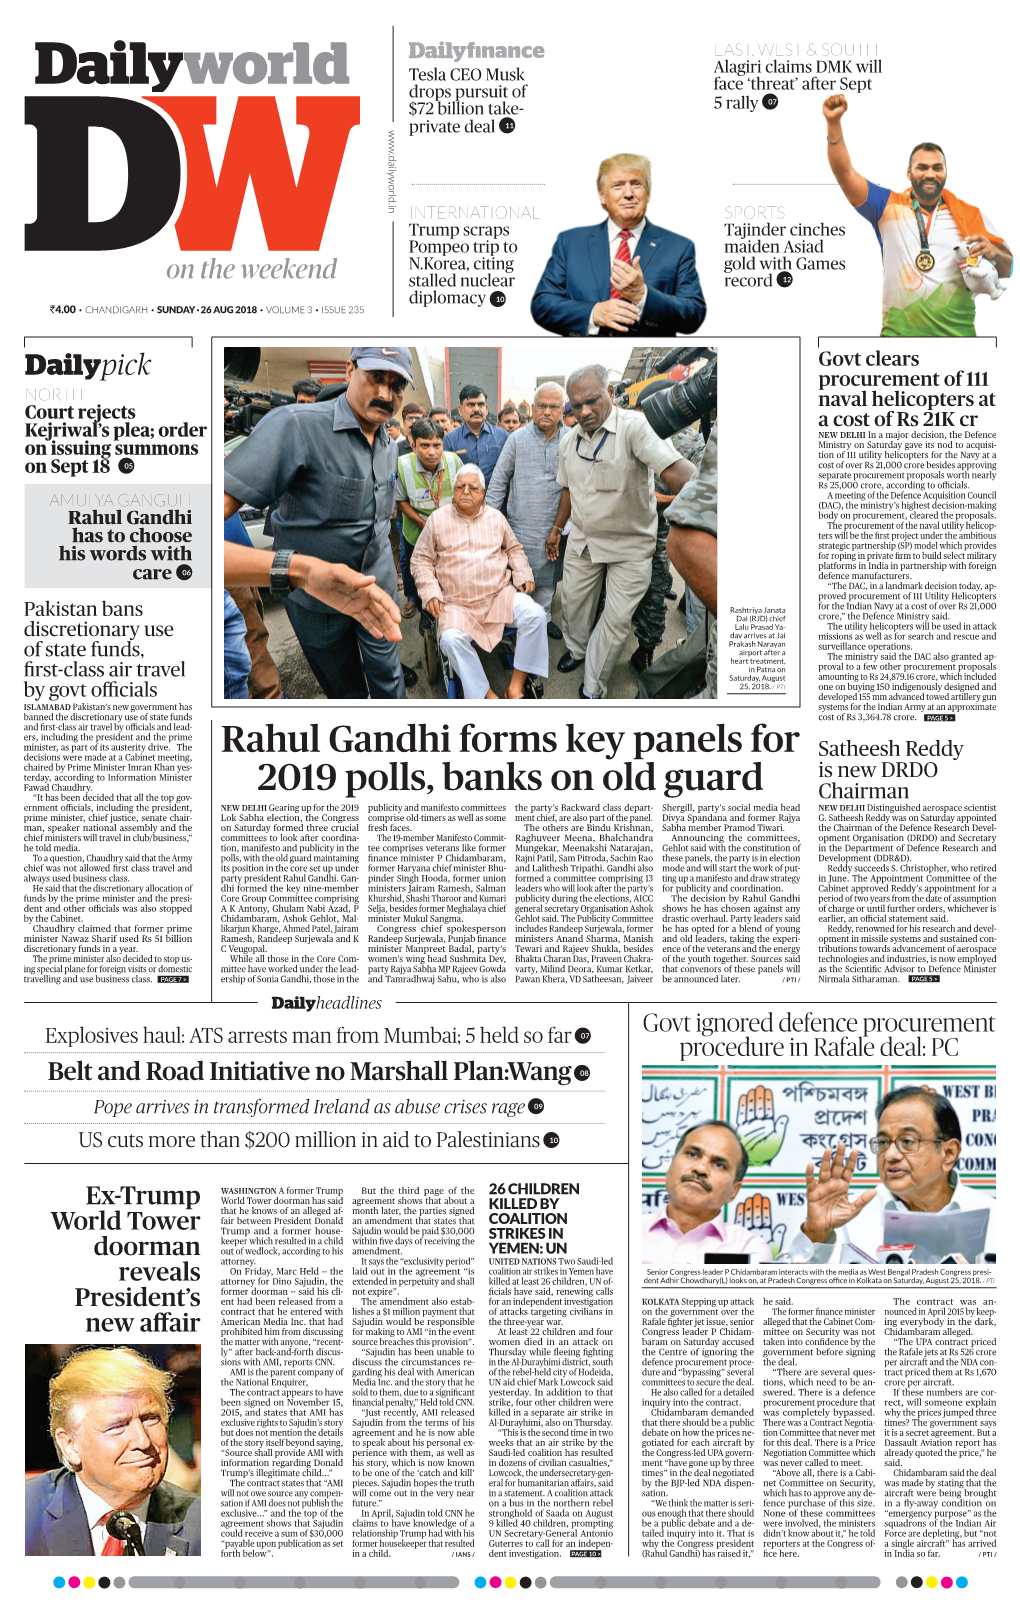 Rahul Gandhi Forms Key Panels for 2019 Polls, Banks on Old Guard